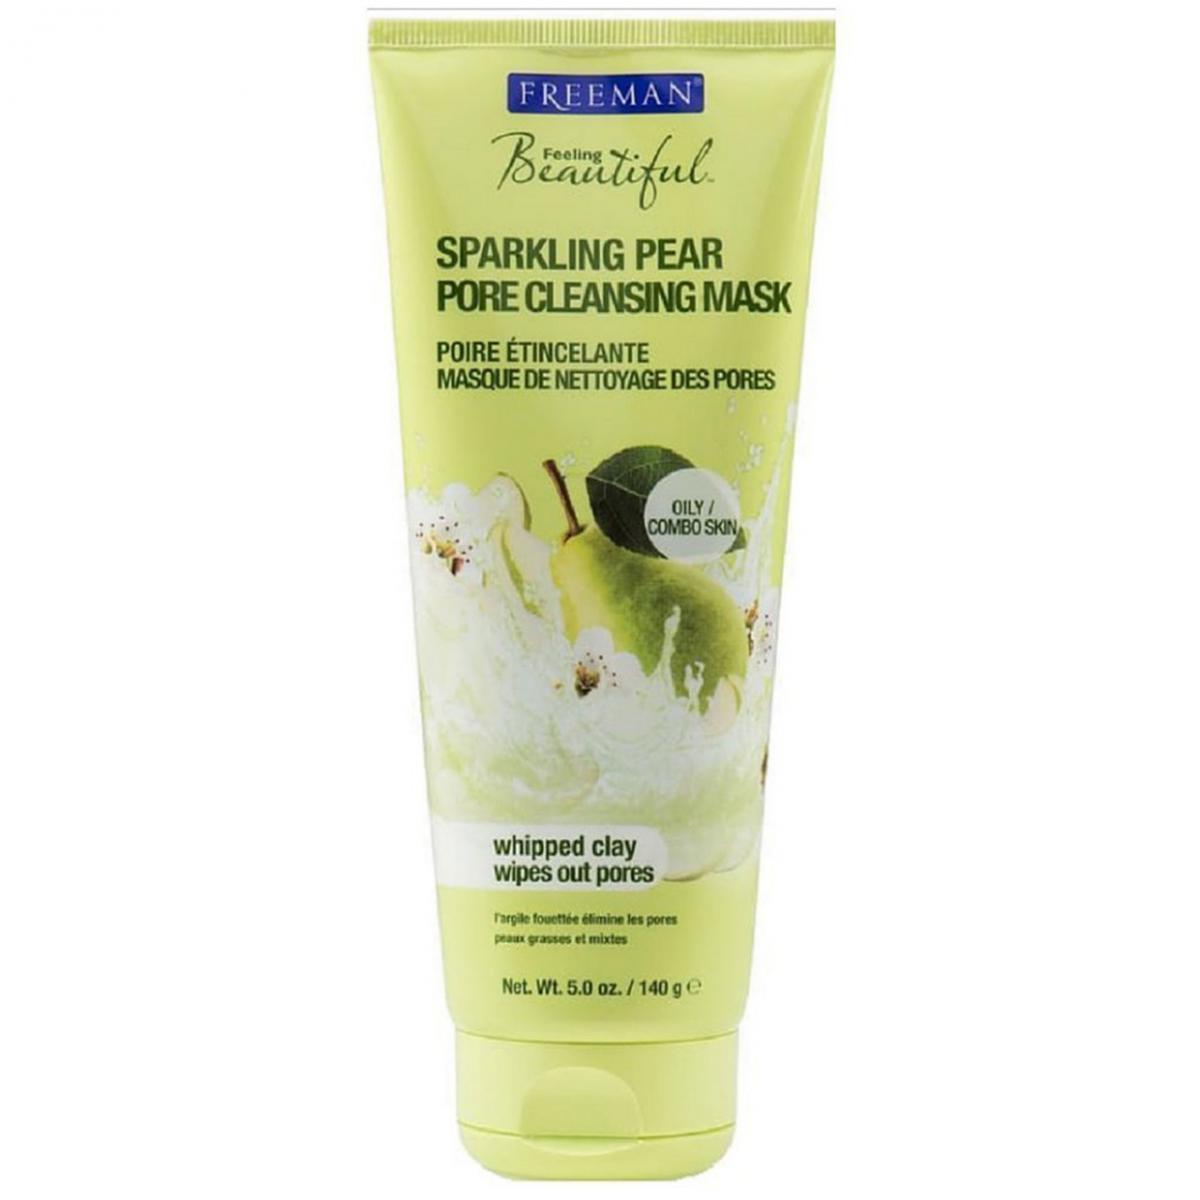 ماسک پاکسازی منافذ گلابی - Sparkling Pear Pore Cleansing Mask